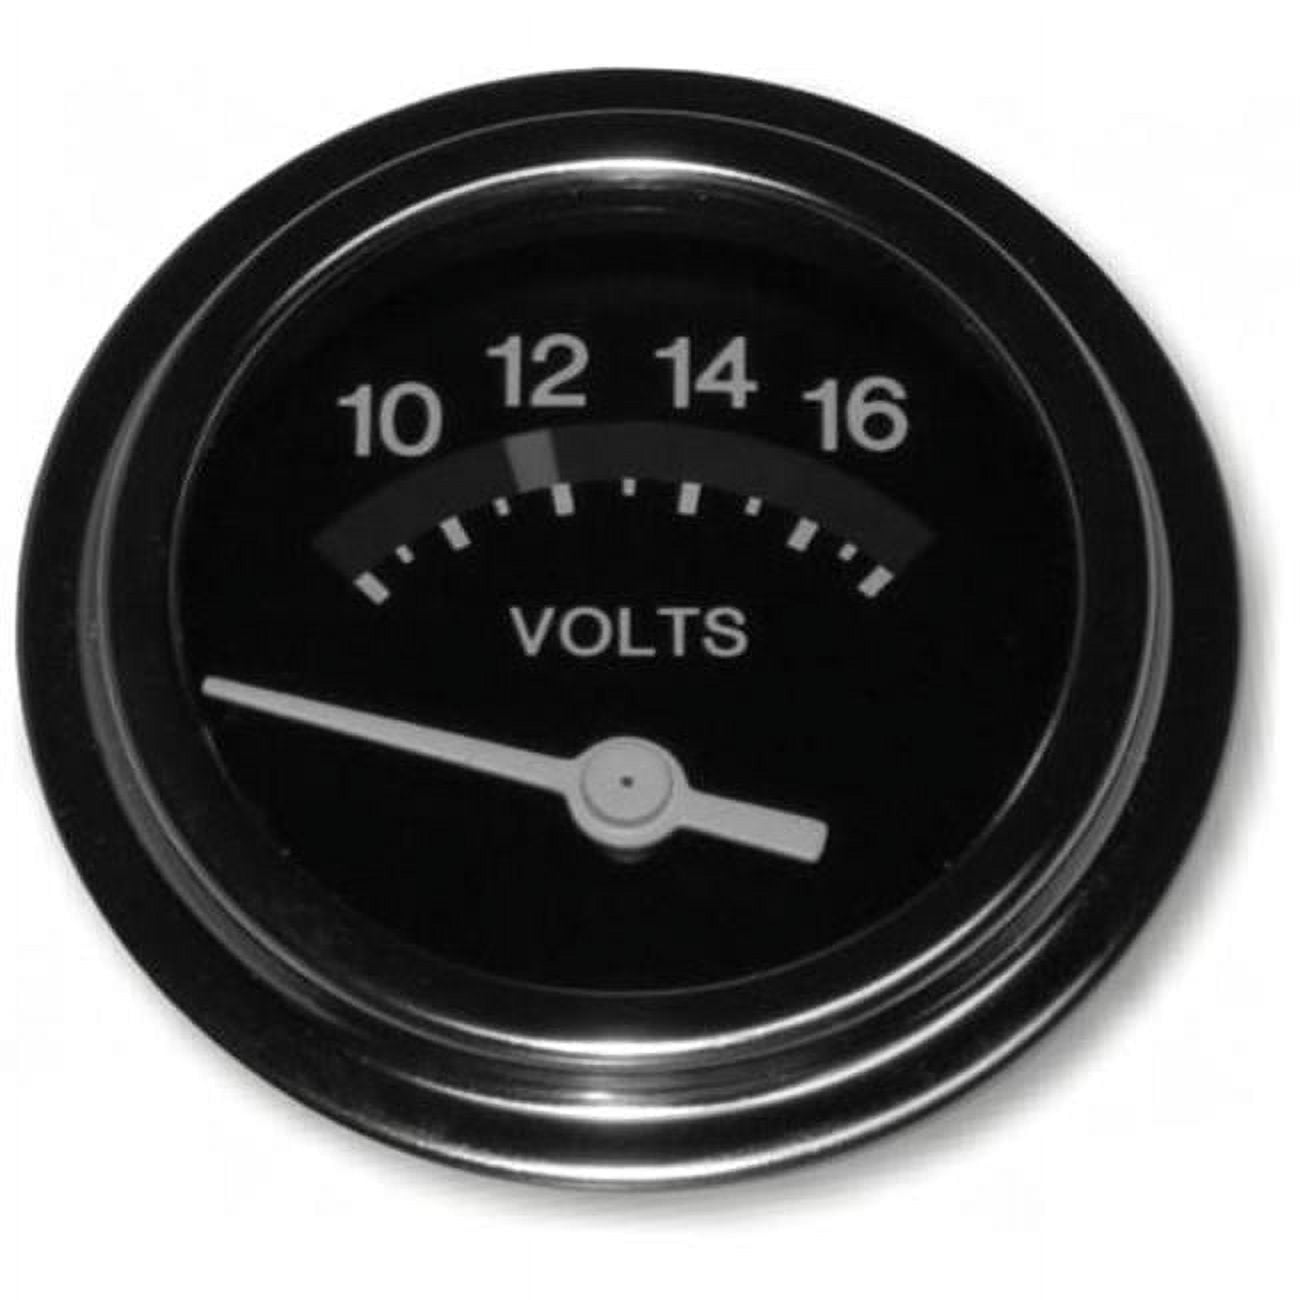 12 Volt Dc Voltmeter - 10-16 Volts (4x4 Vehicles)